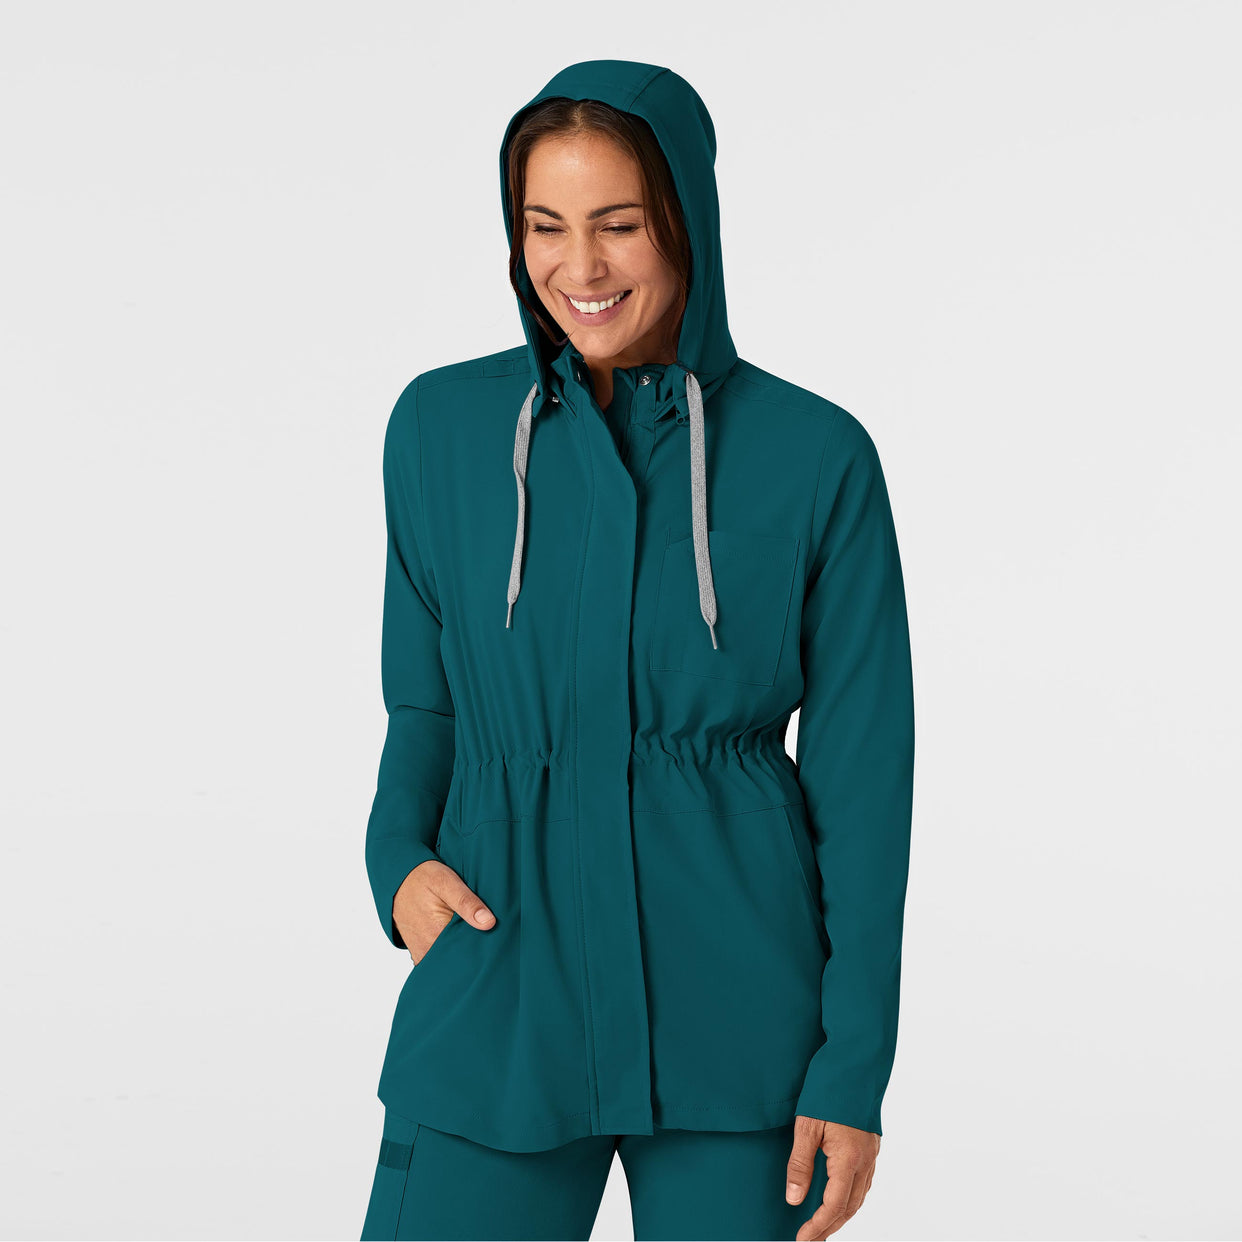 RENEW Women's Convertible Hood Fashion Jacket Caribbean Blue front detail